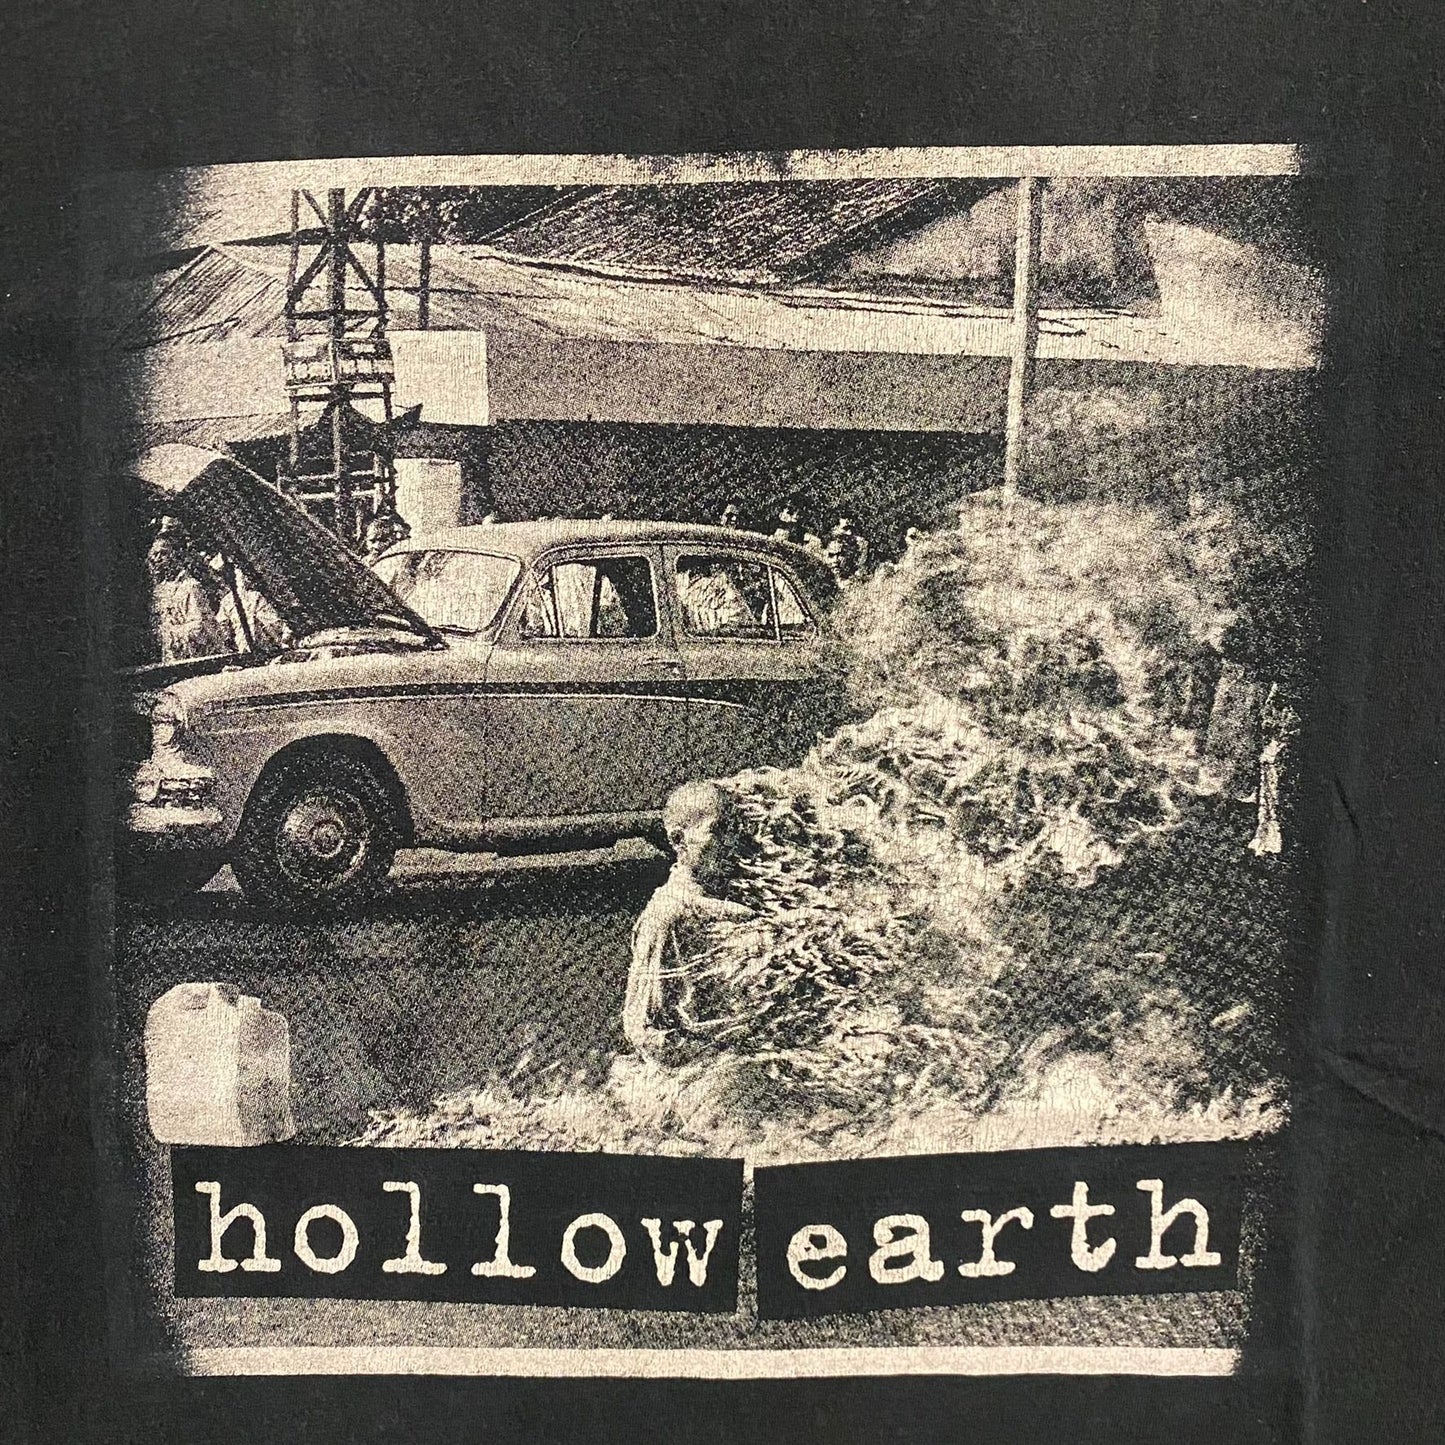 Hollow Earth Artwork Vintage Heavy Metal Band T-Shirt